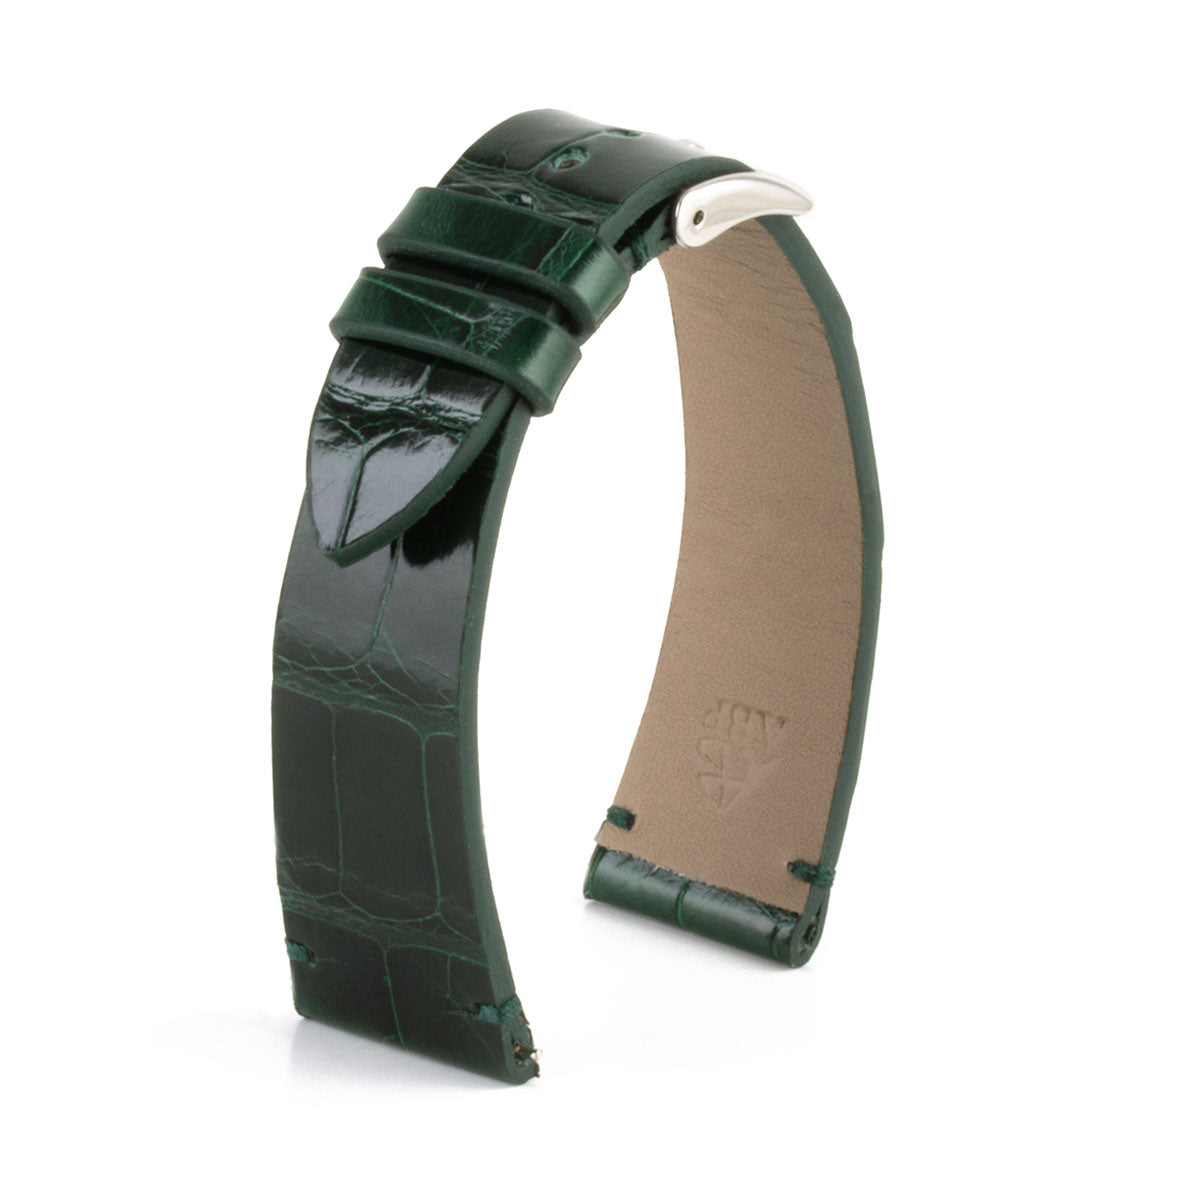 ​"Retro" watchband - Shiny alligator leather strap (black, blue, green, brown, burgundy, red, orange)